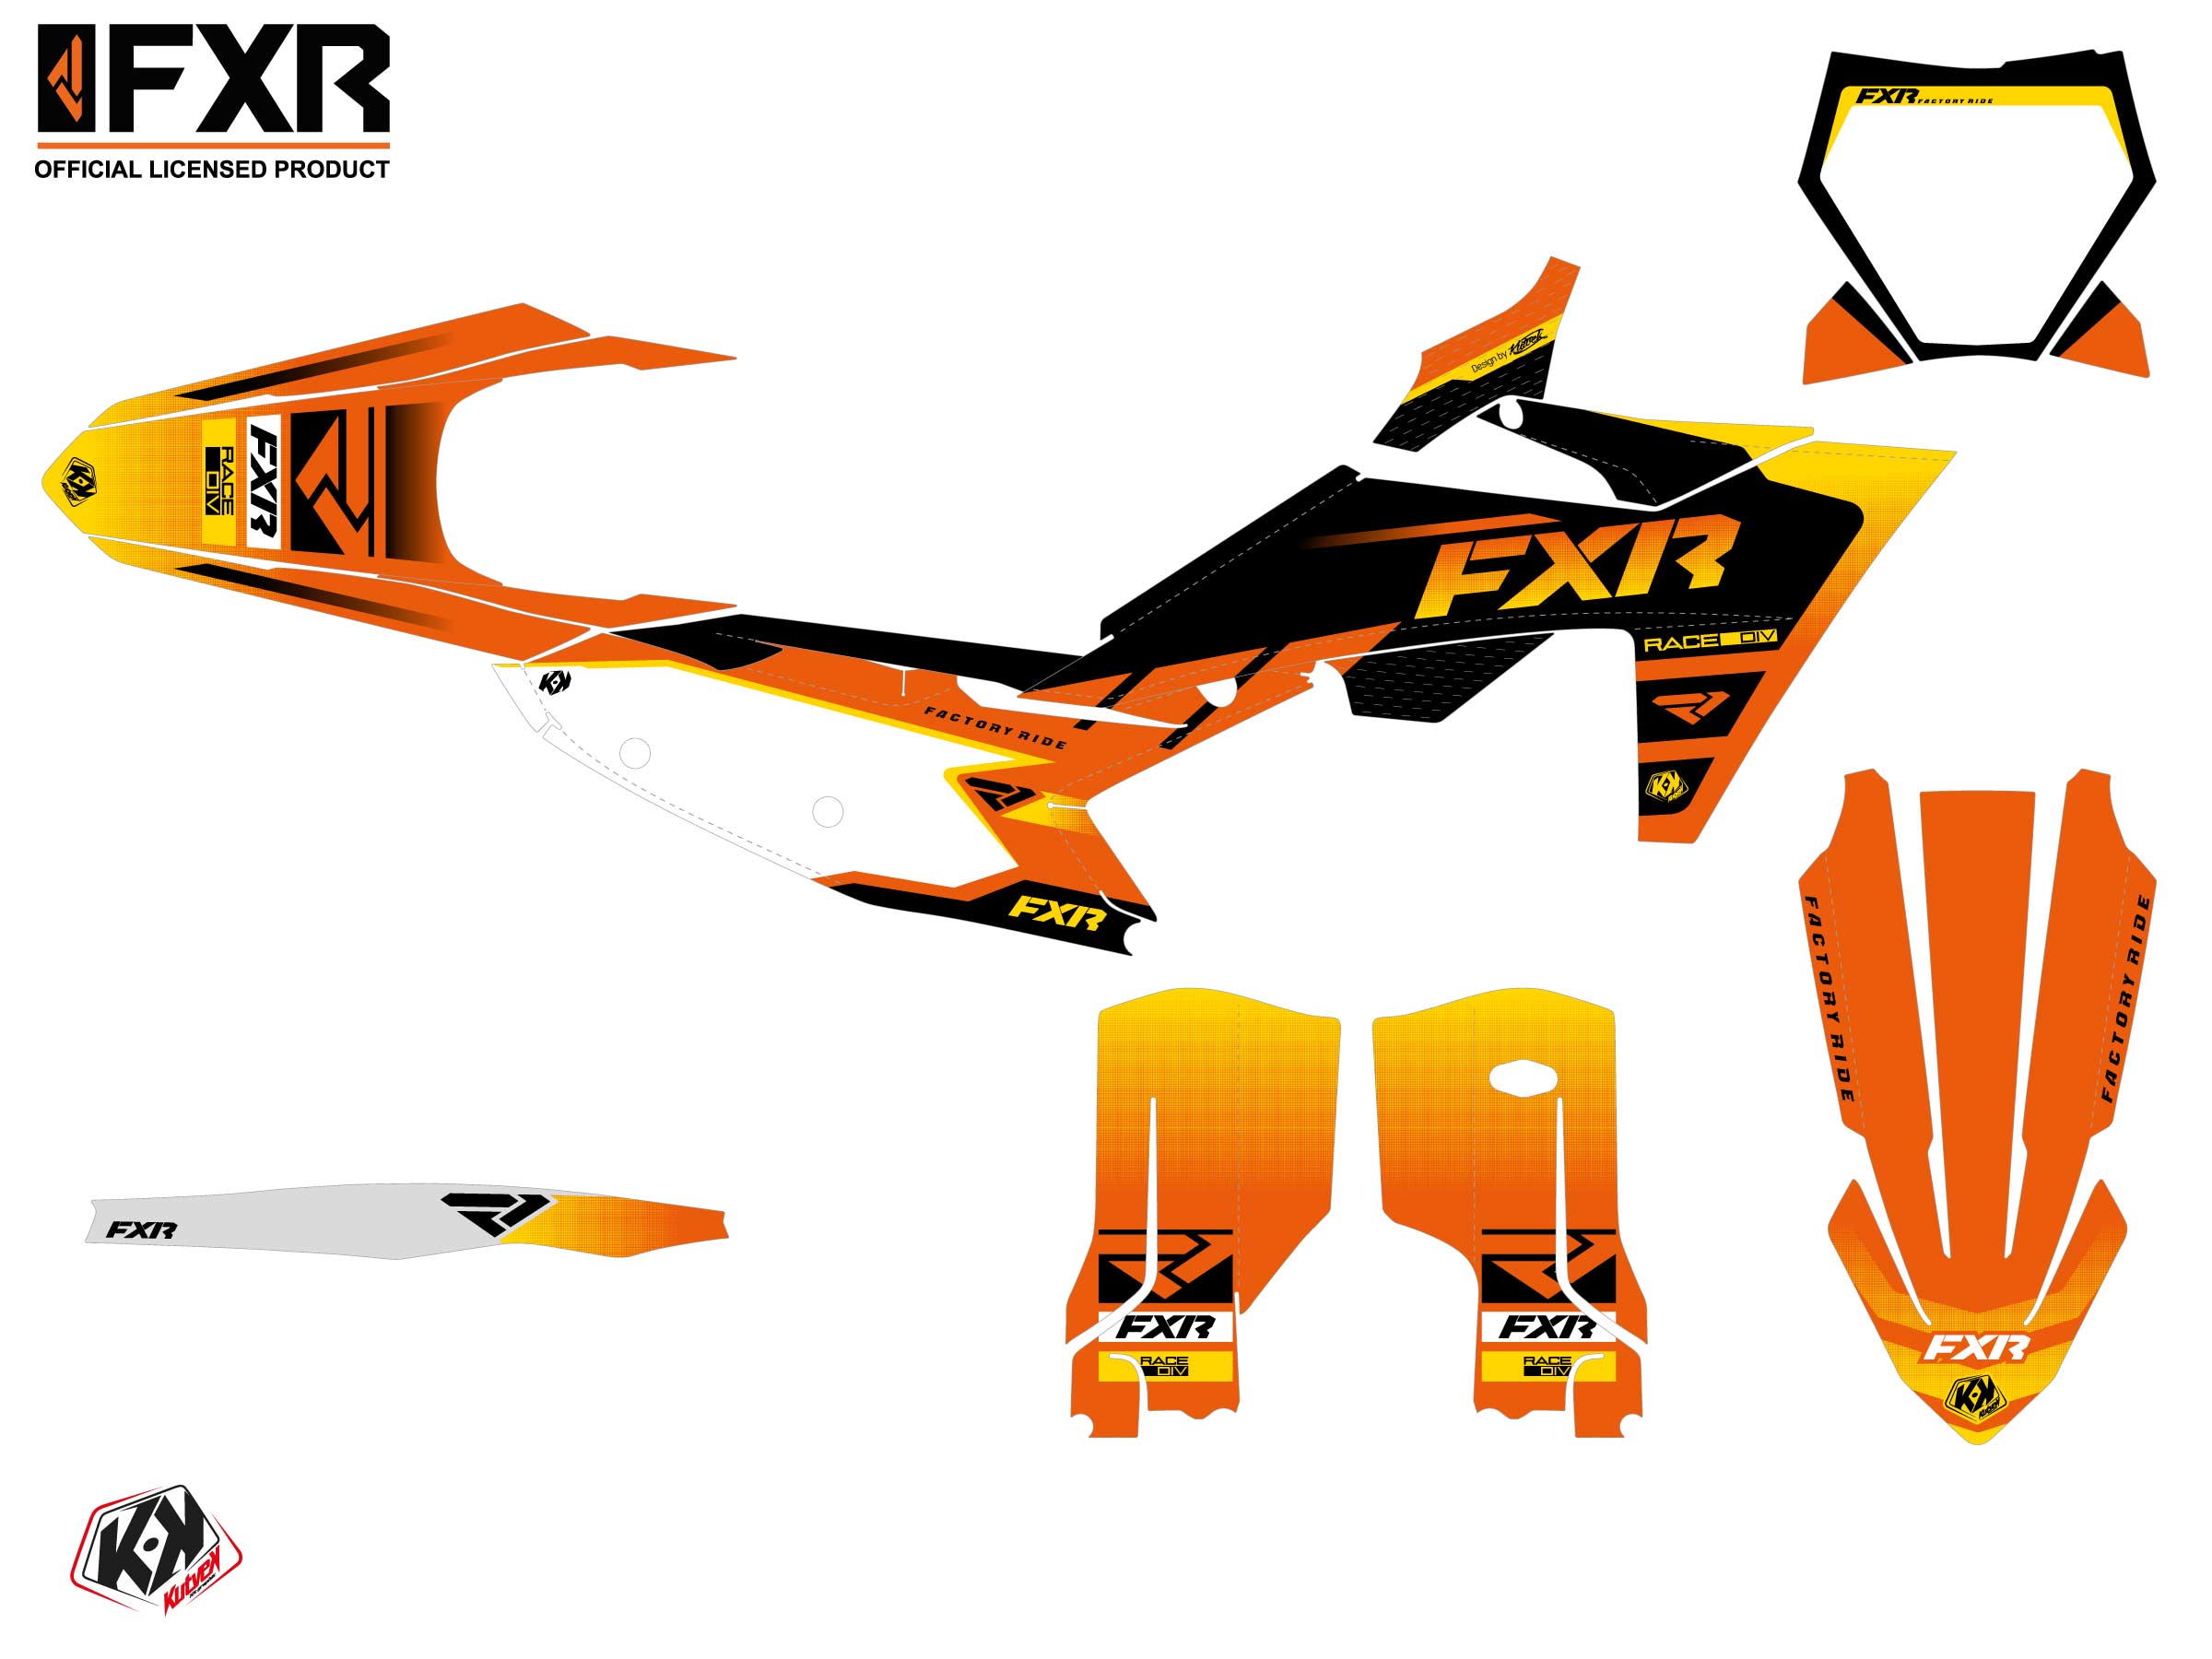 Ktm Sx 450 F Dirt Bike Fxr Revo Graphic Kit Orange